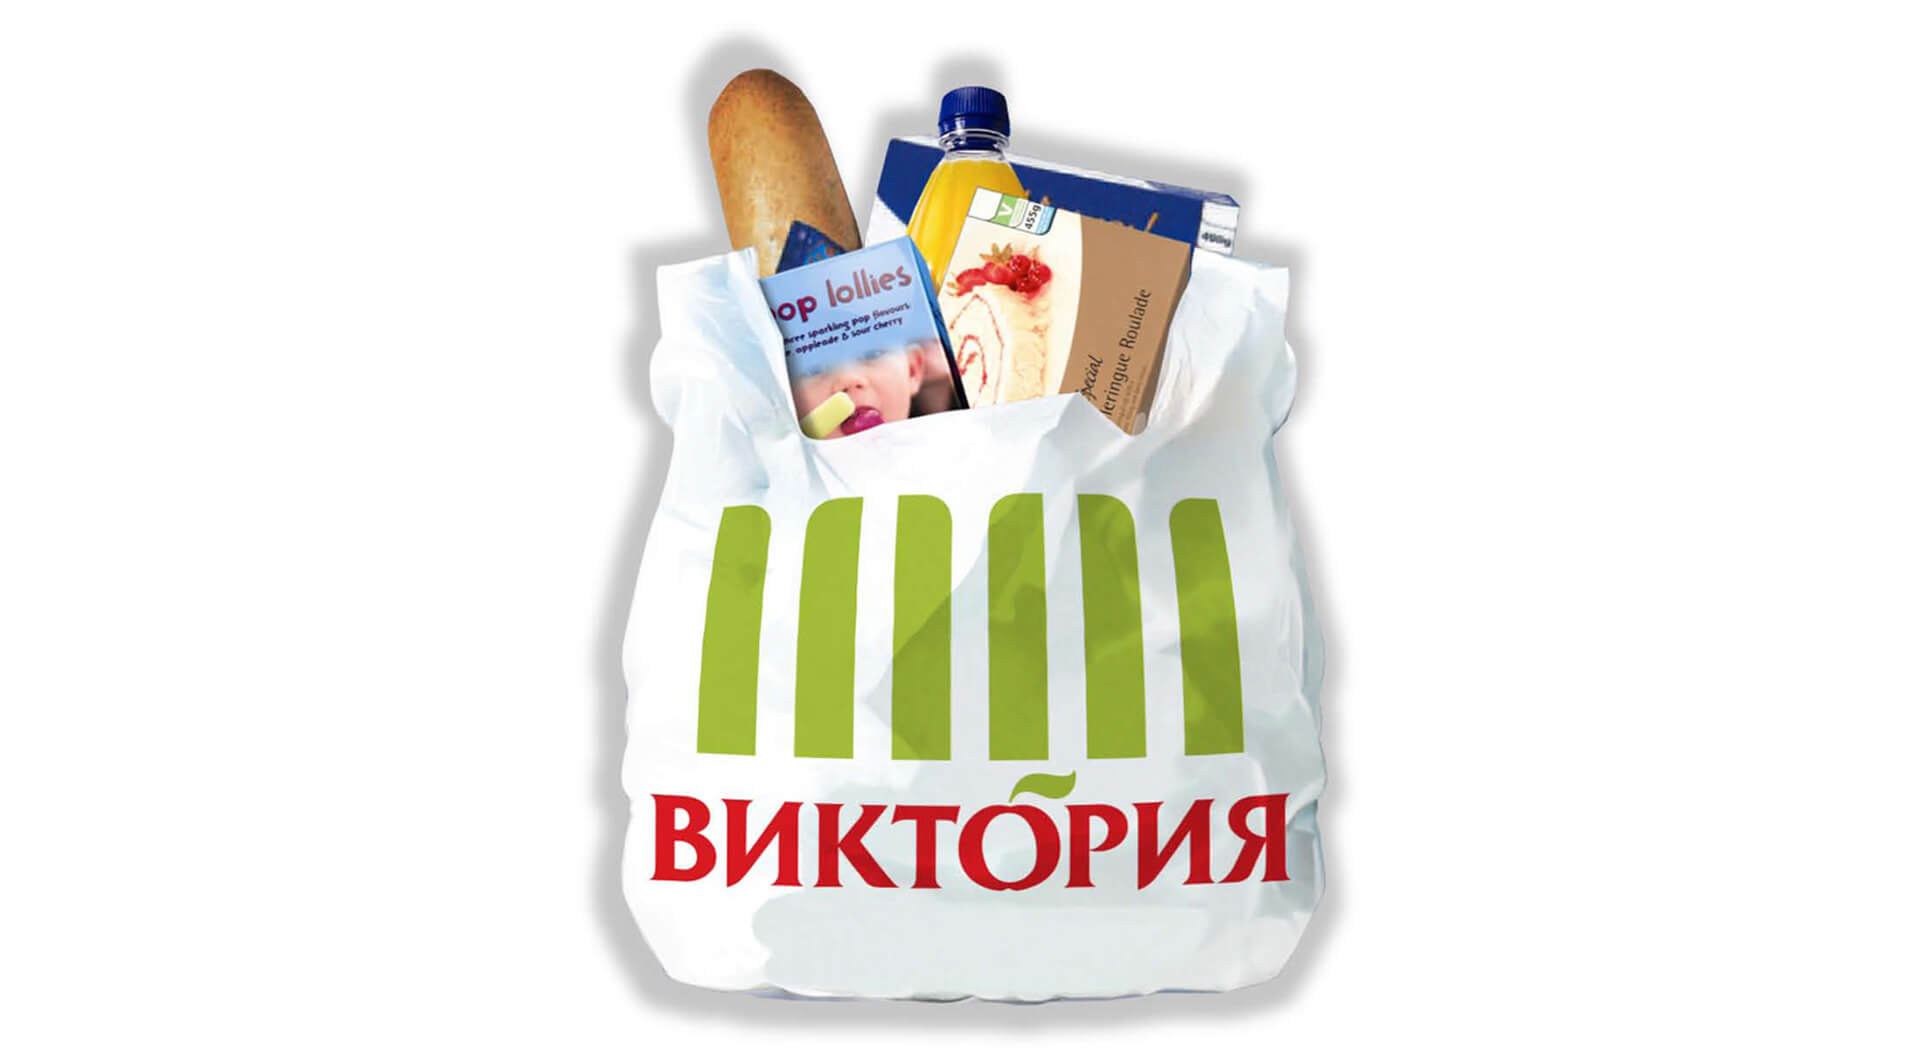 Victoria supermarkets Russia brand identity store shopping bag